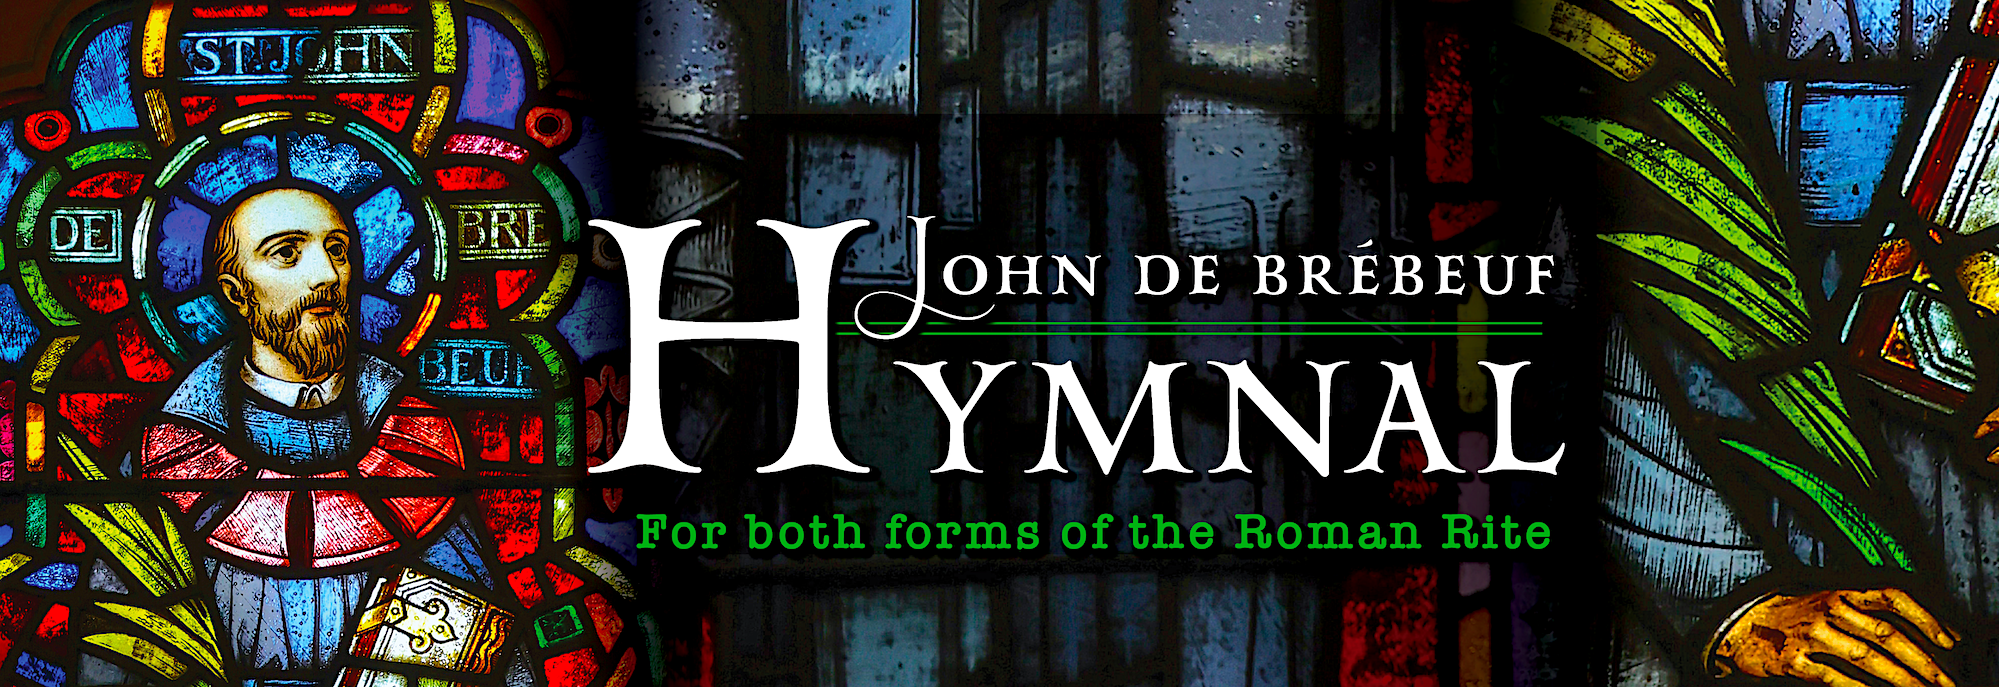 The Saint John de Brébeuf Hymnal